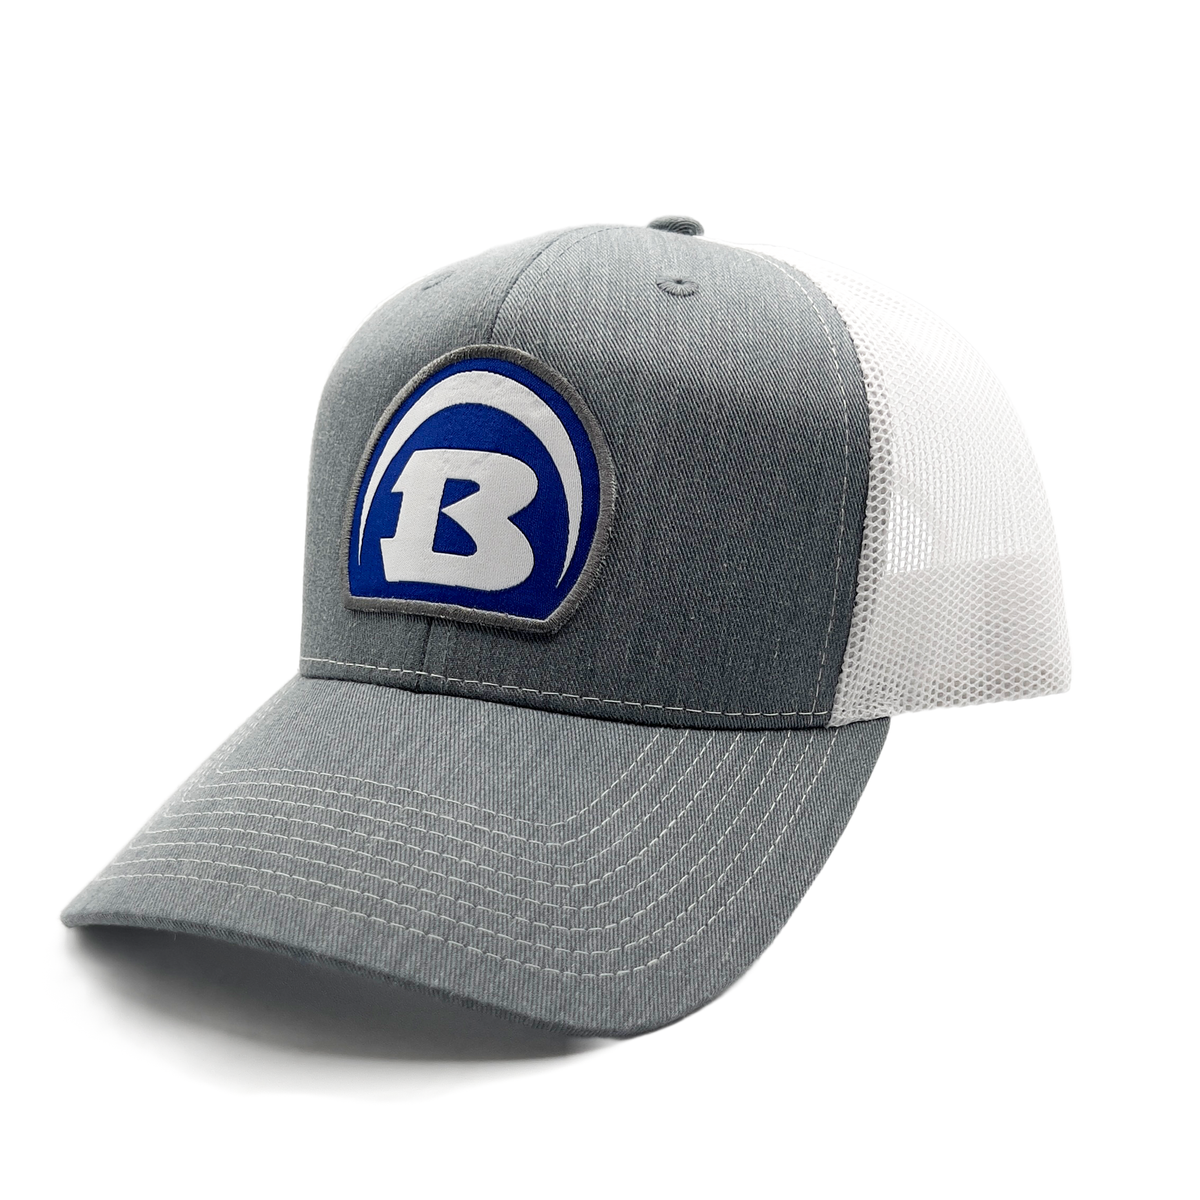 Bryant "B" Patch Hat